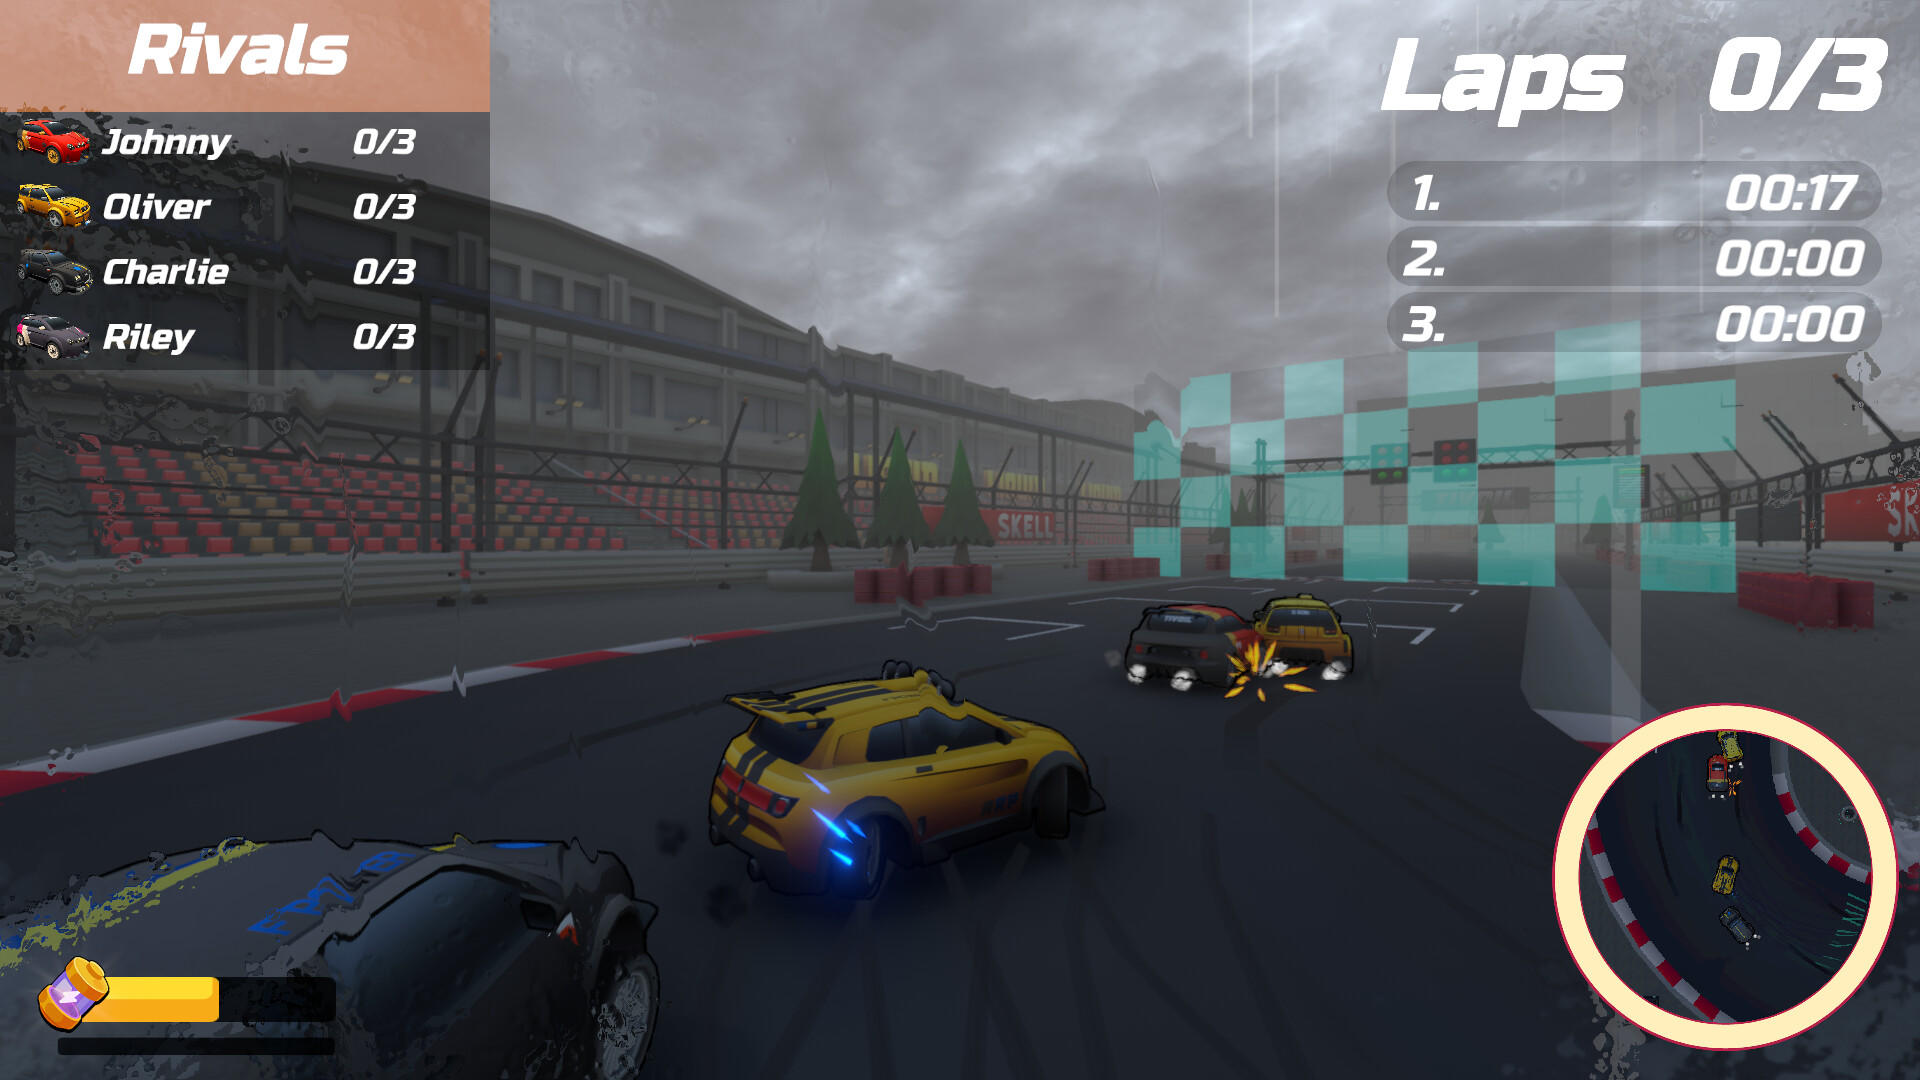 Screenshot of Turbo Racing